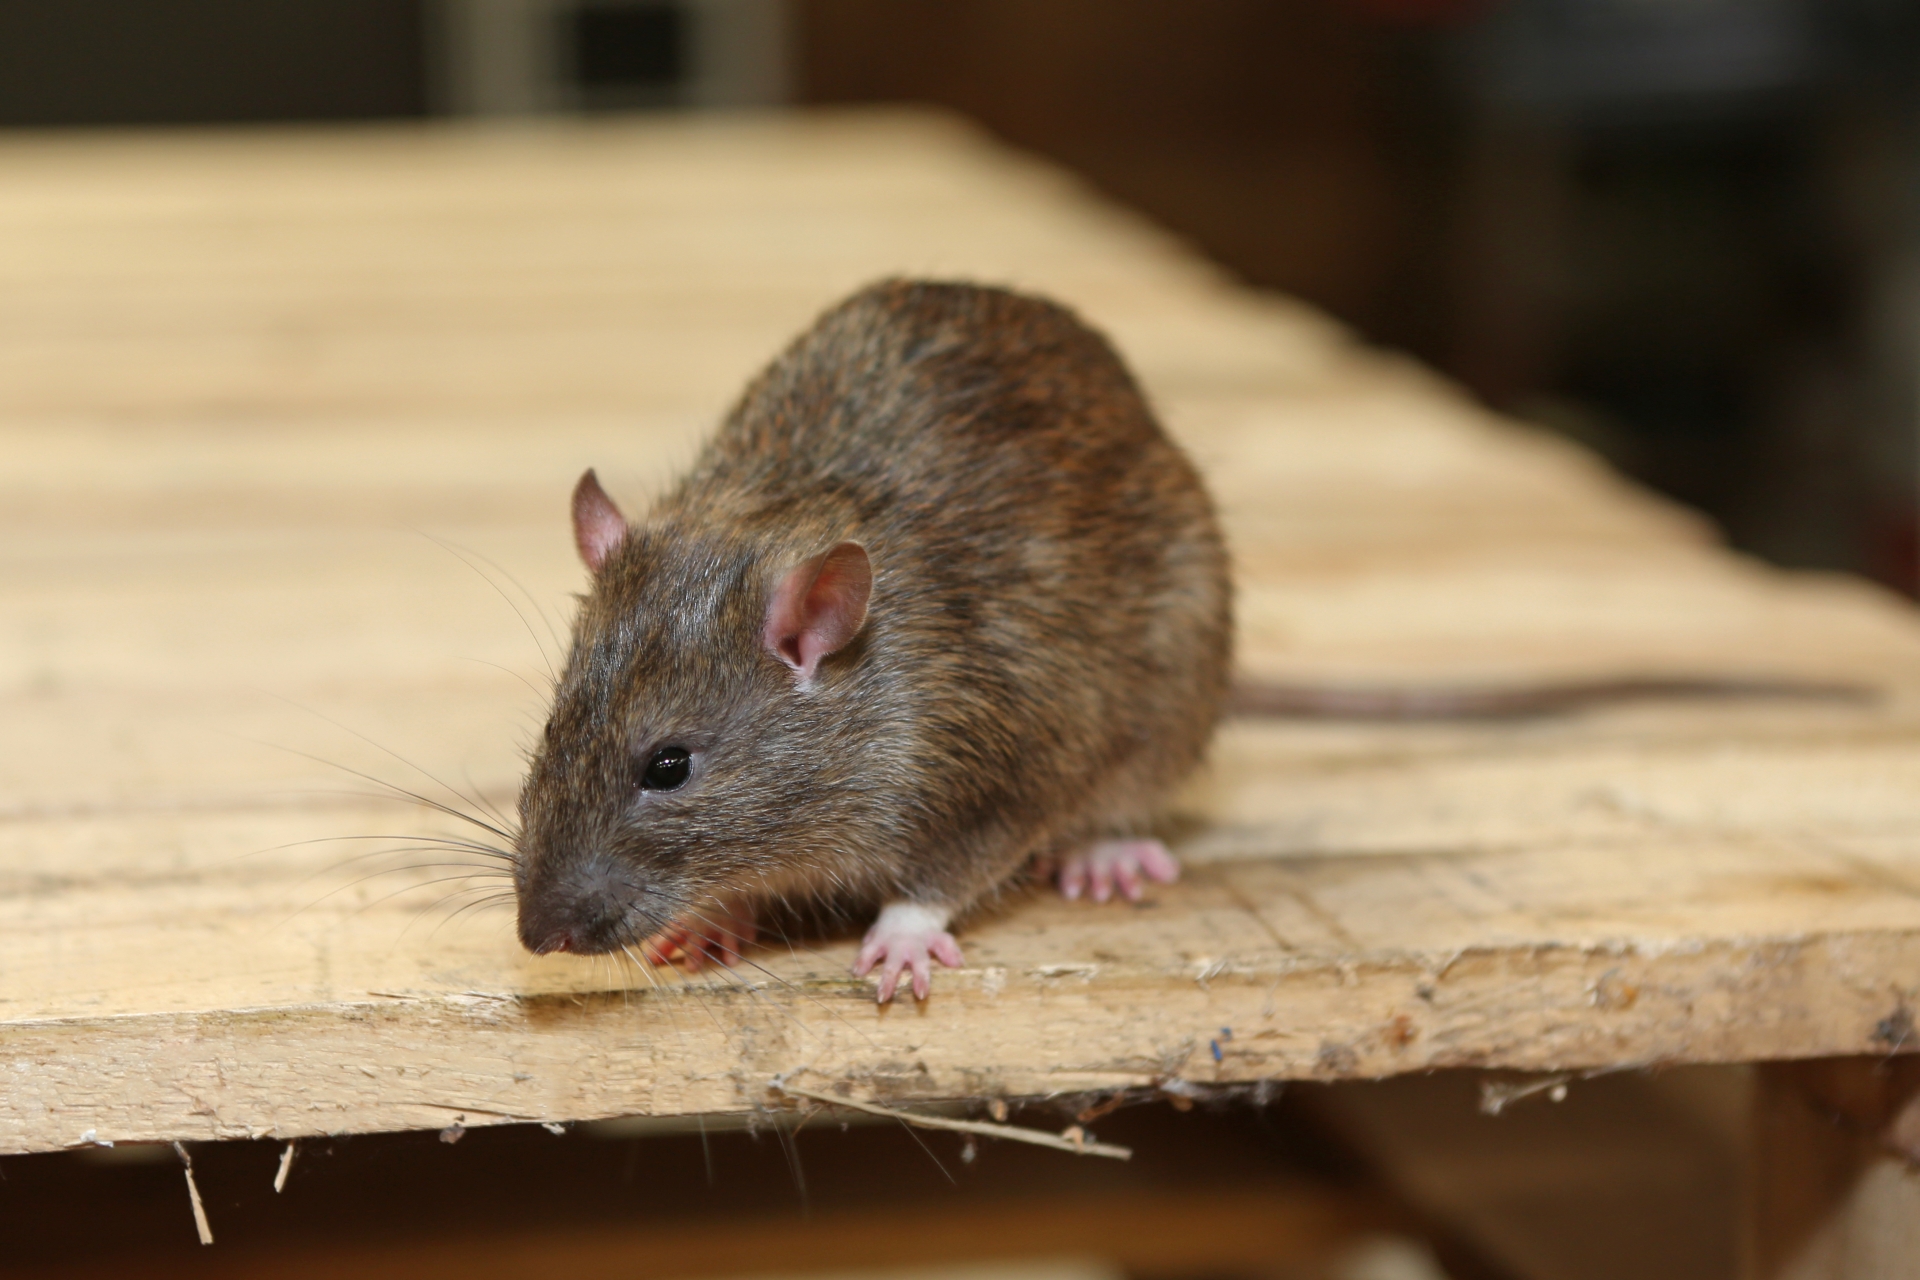 Rat extermination, Pest Control in Leatherhead, Oxshott, Fetcham, KT22. Call Now 020 8166 9746